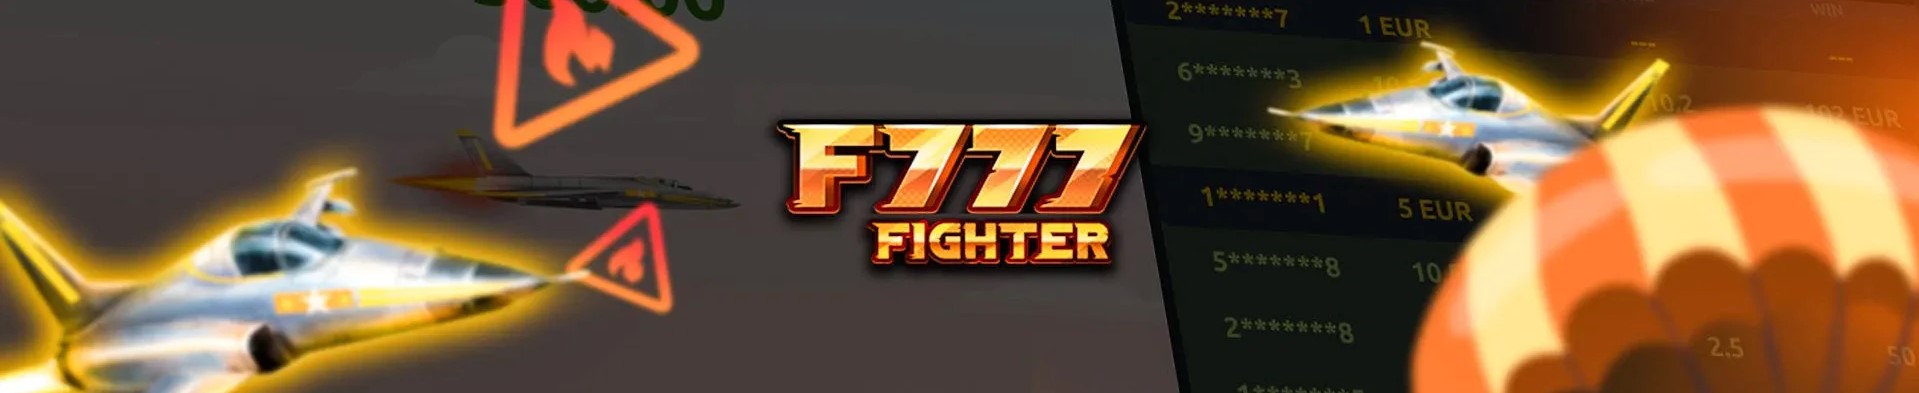 F777 fighter கேம்.